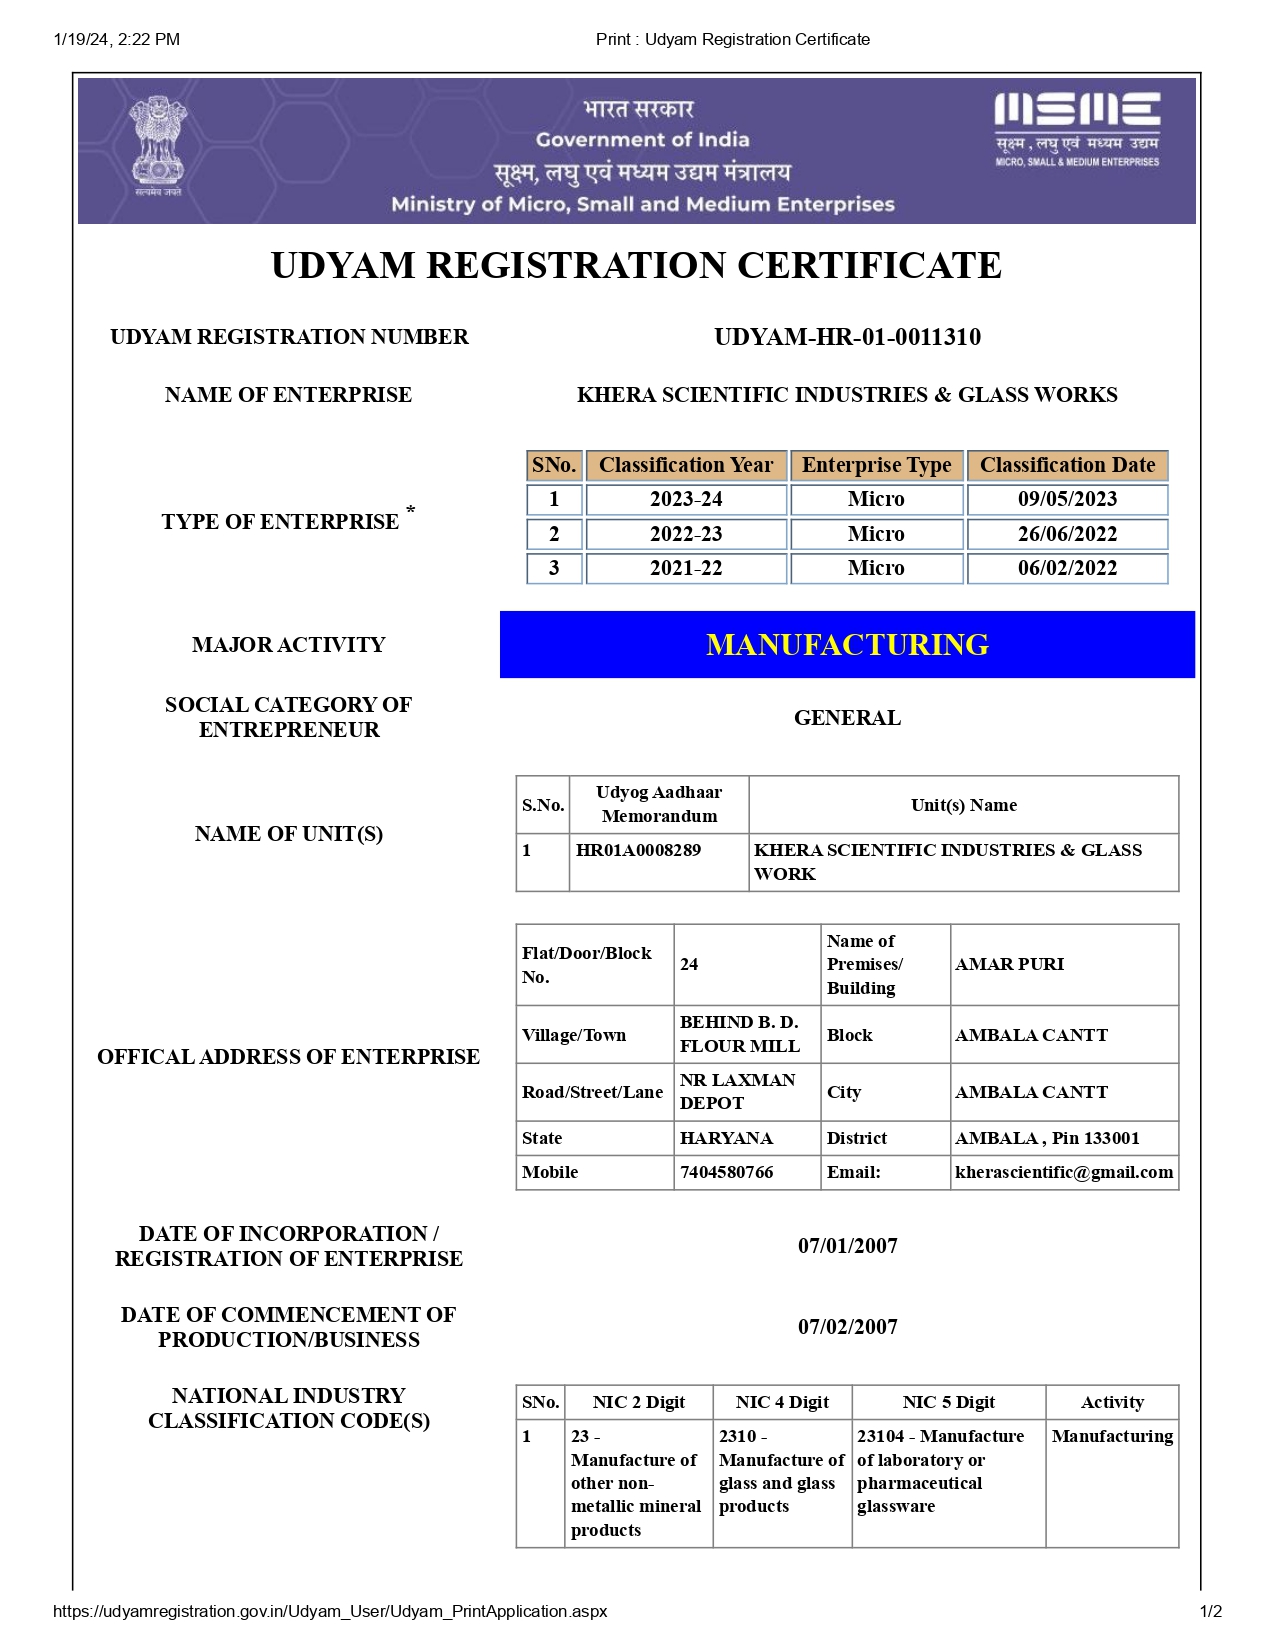 Udyam Registration Certificate msme_page-0001